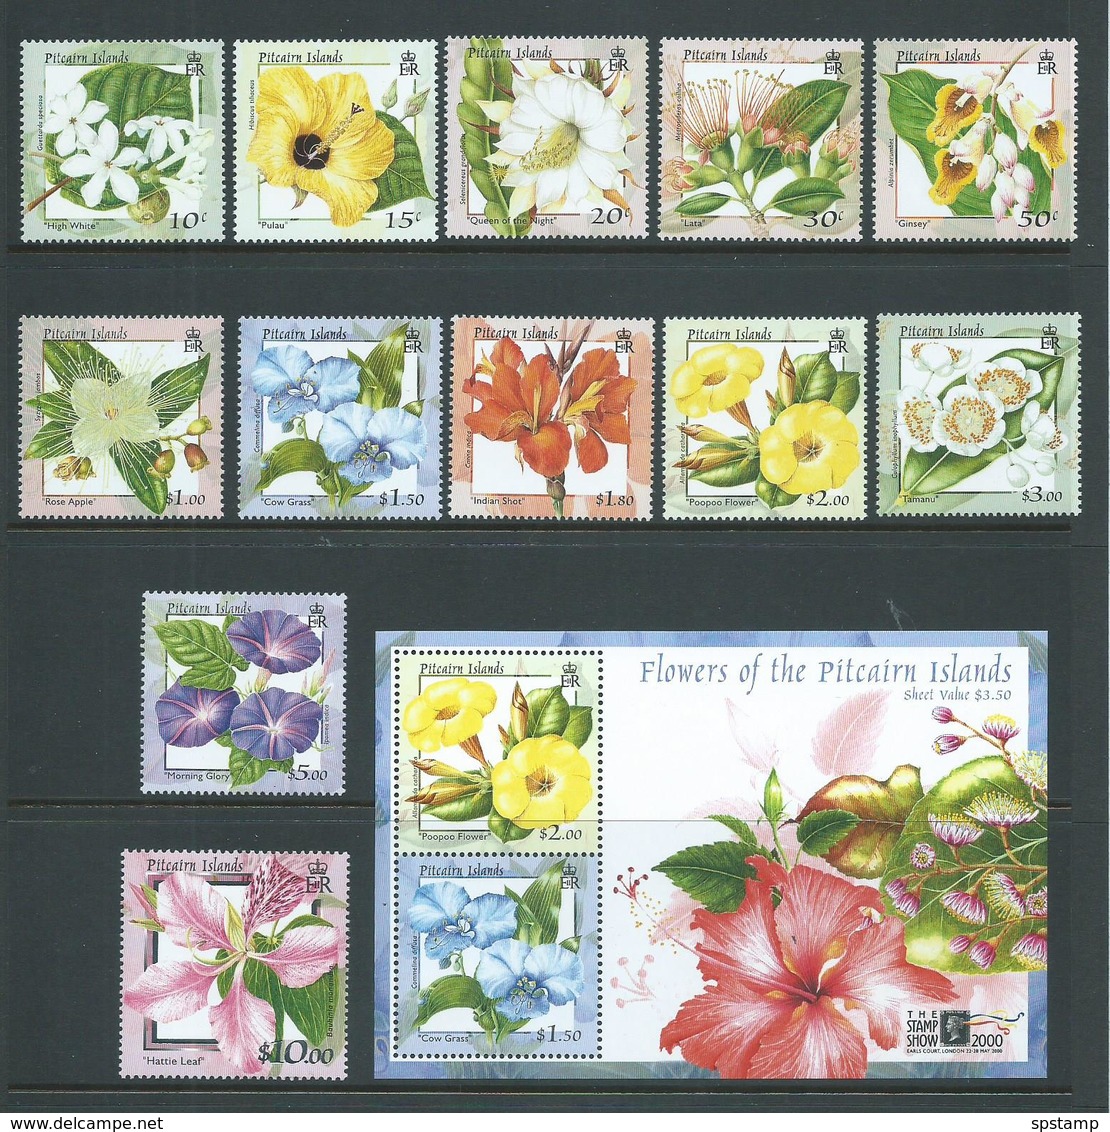 Pitcairn Islands 2000 Flower Definitives Set 12  To $10 & Miniature Sheet MNH , $5 With Tiny Gum Mark - Pitcairn